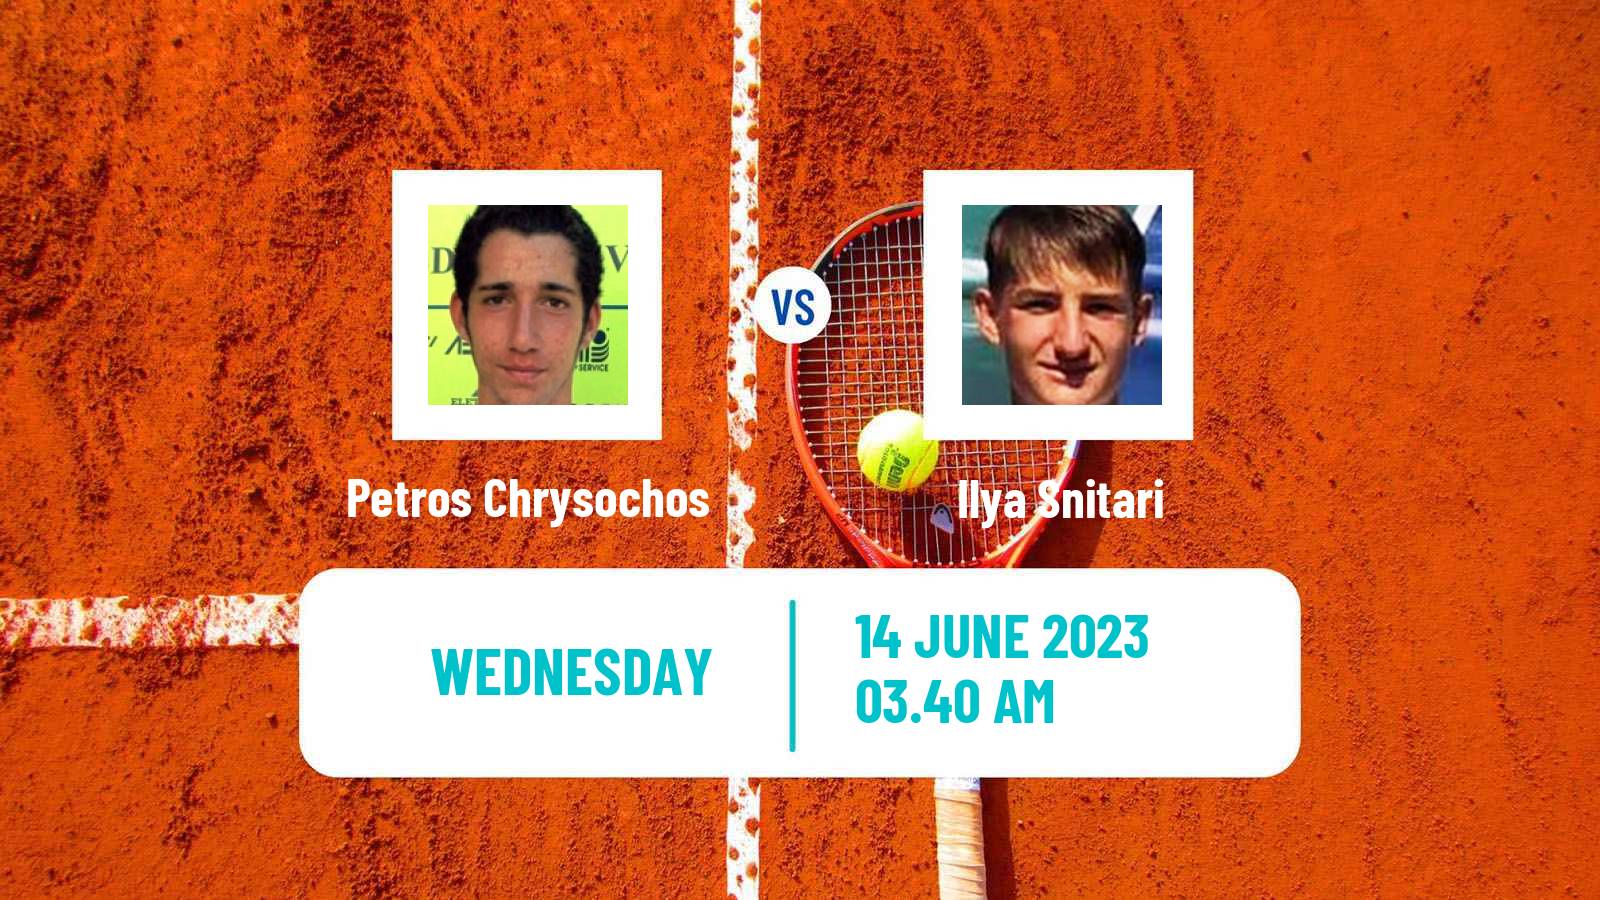 Tennis Davis Cup Group III Petros Chrysochos - Ilya Snitari